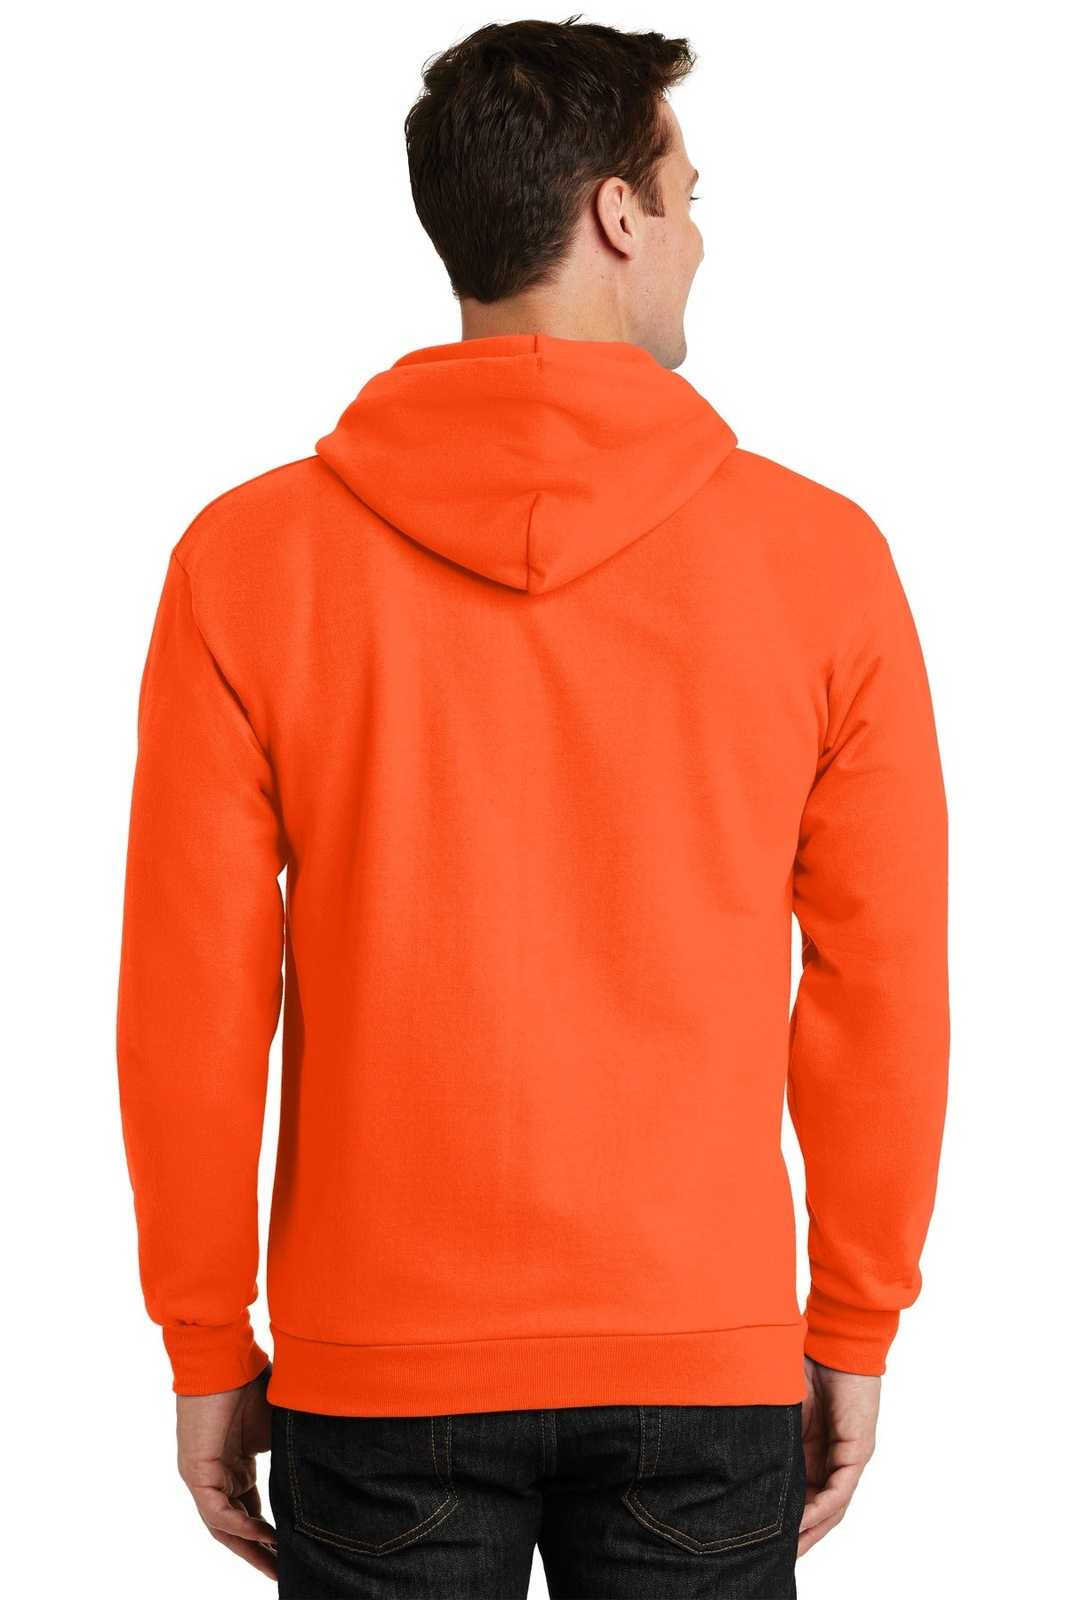 Port & Company PC90ZH Essential Fleece Full-Zip Hooded Sweatshirt - Safety Orange - HIT a Double - 1